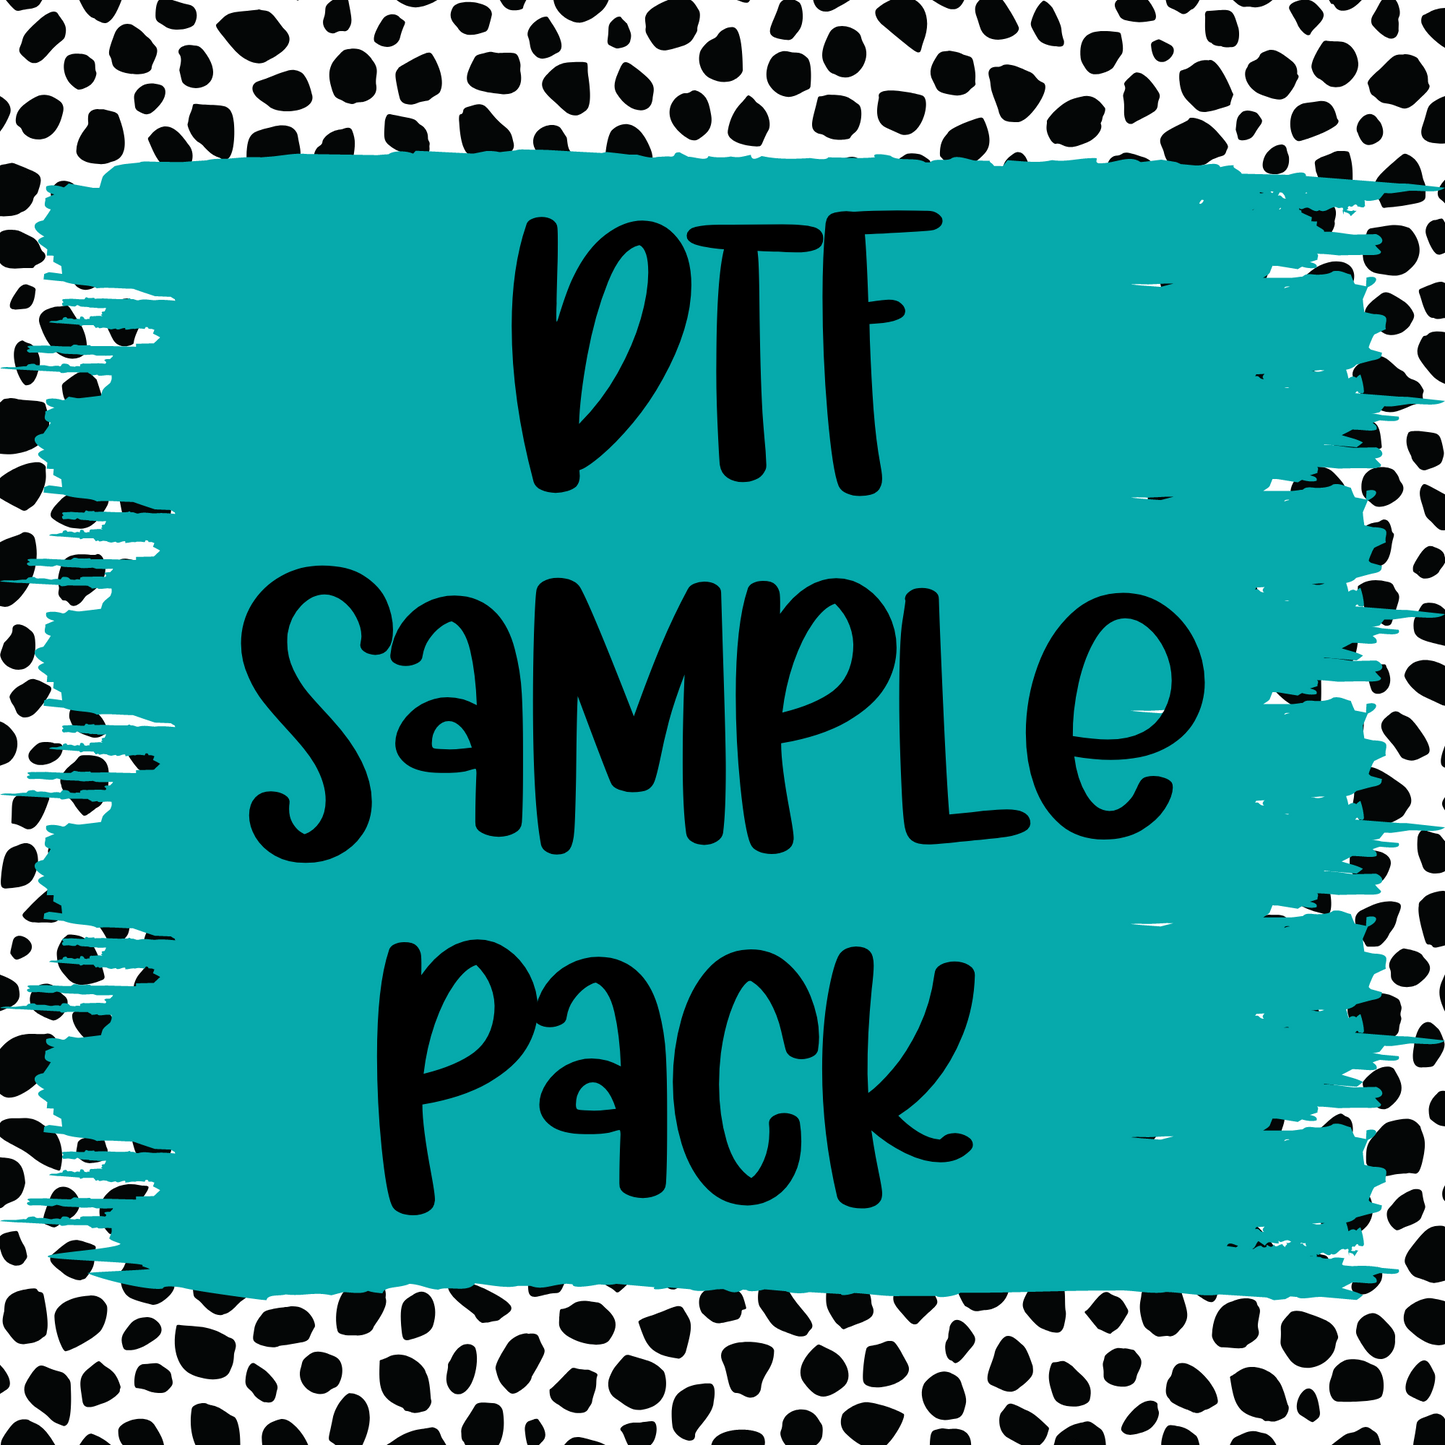 DTF Transfer Sample Pack